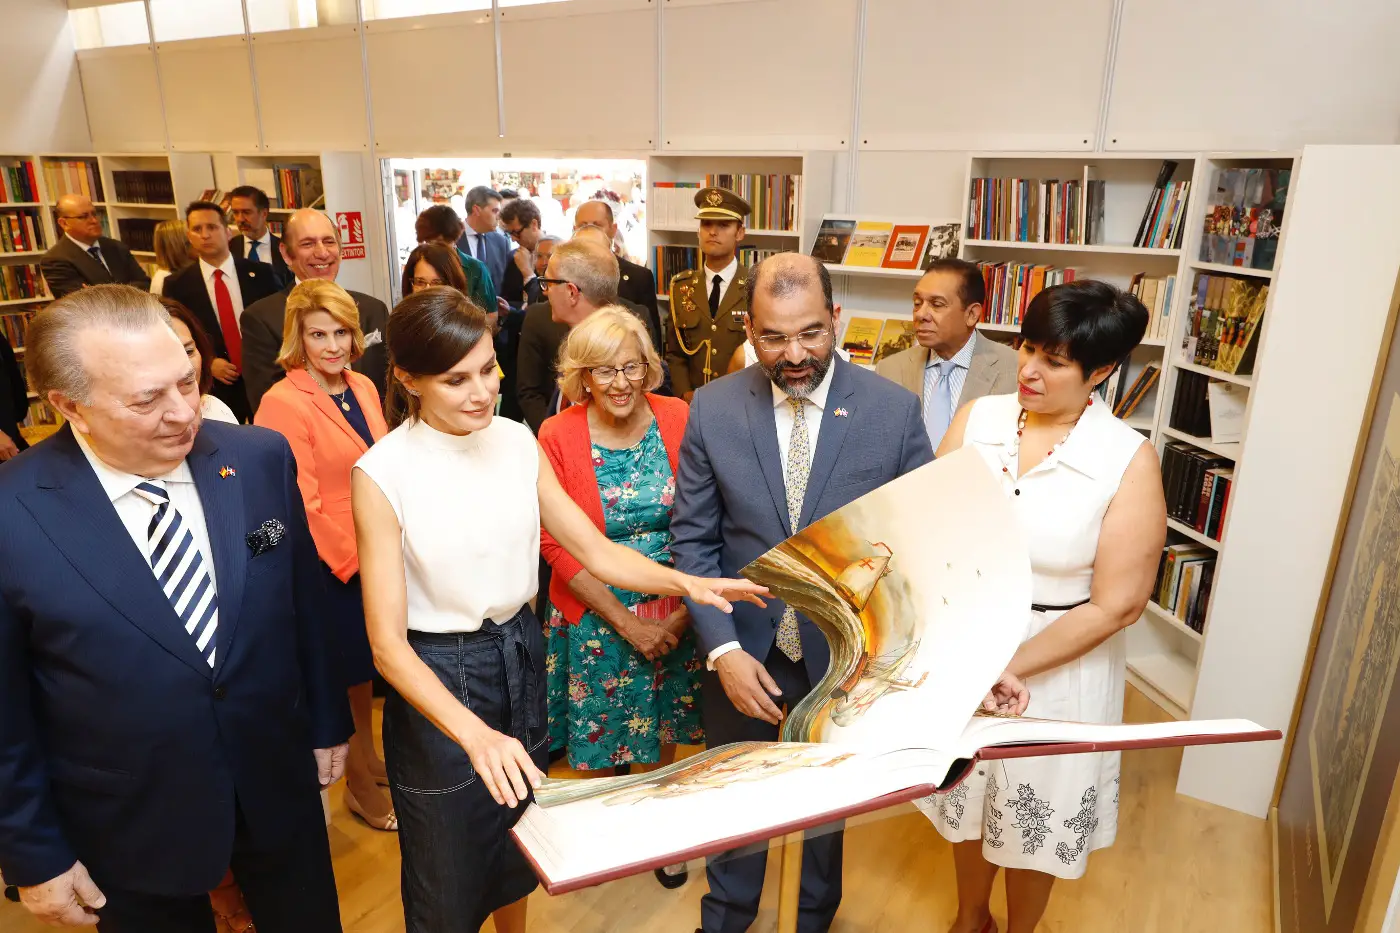 Queen Letizia wore a summer white top and blue denim skirt for madrid book fair